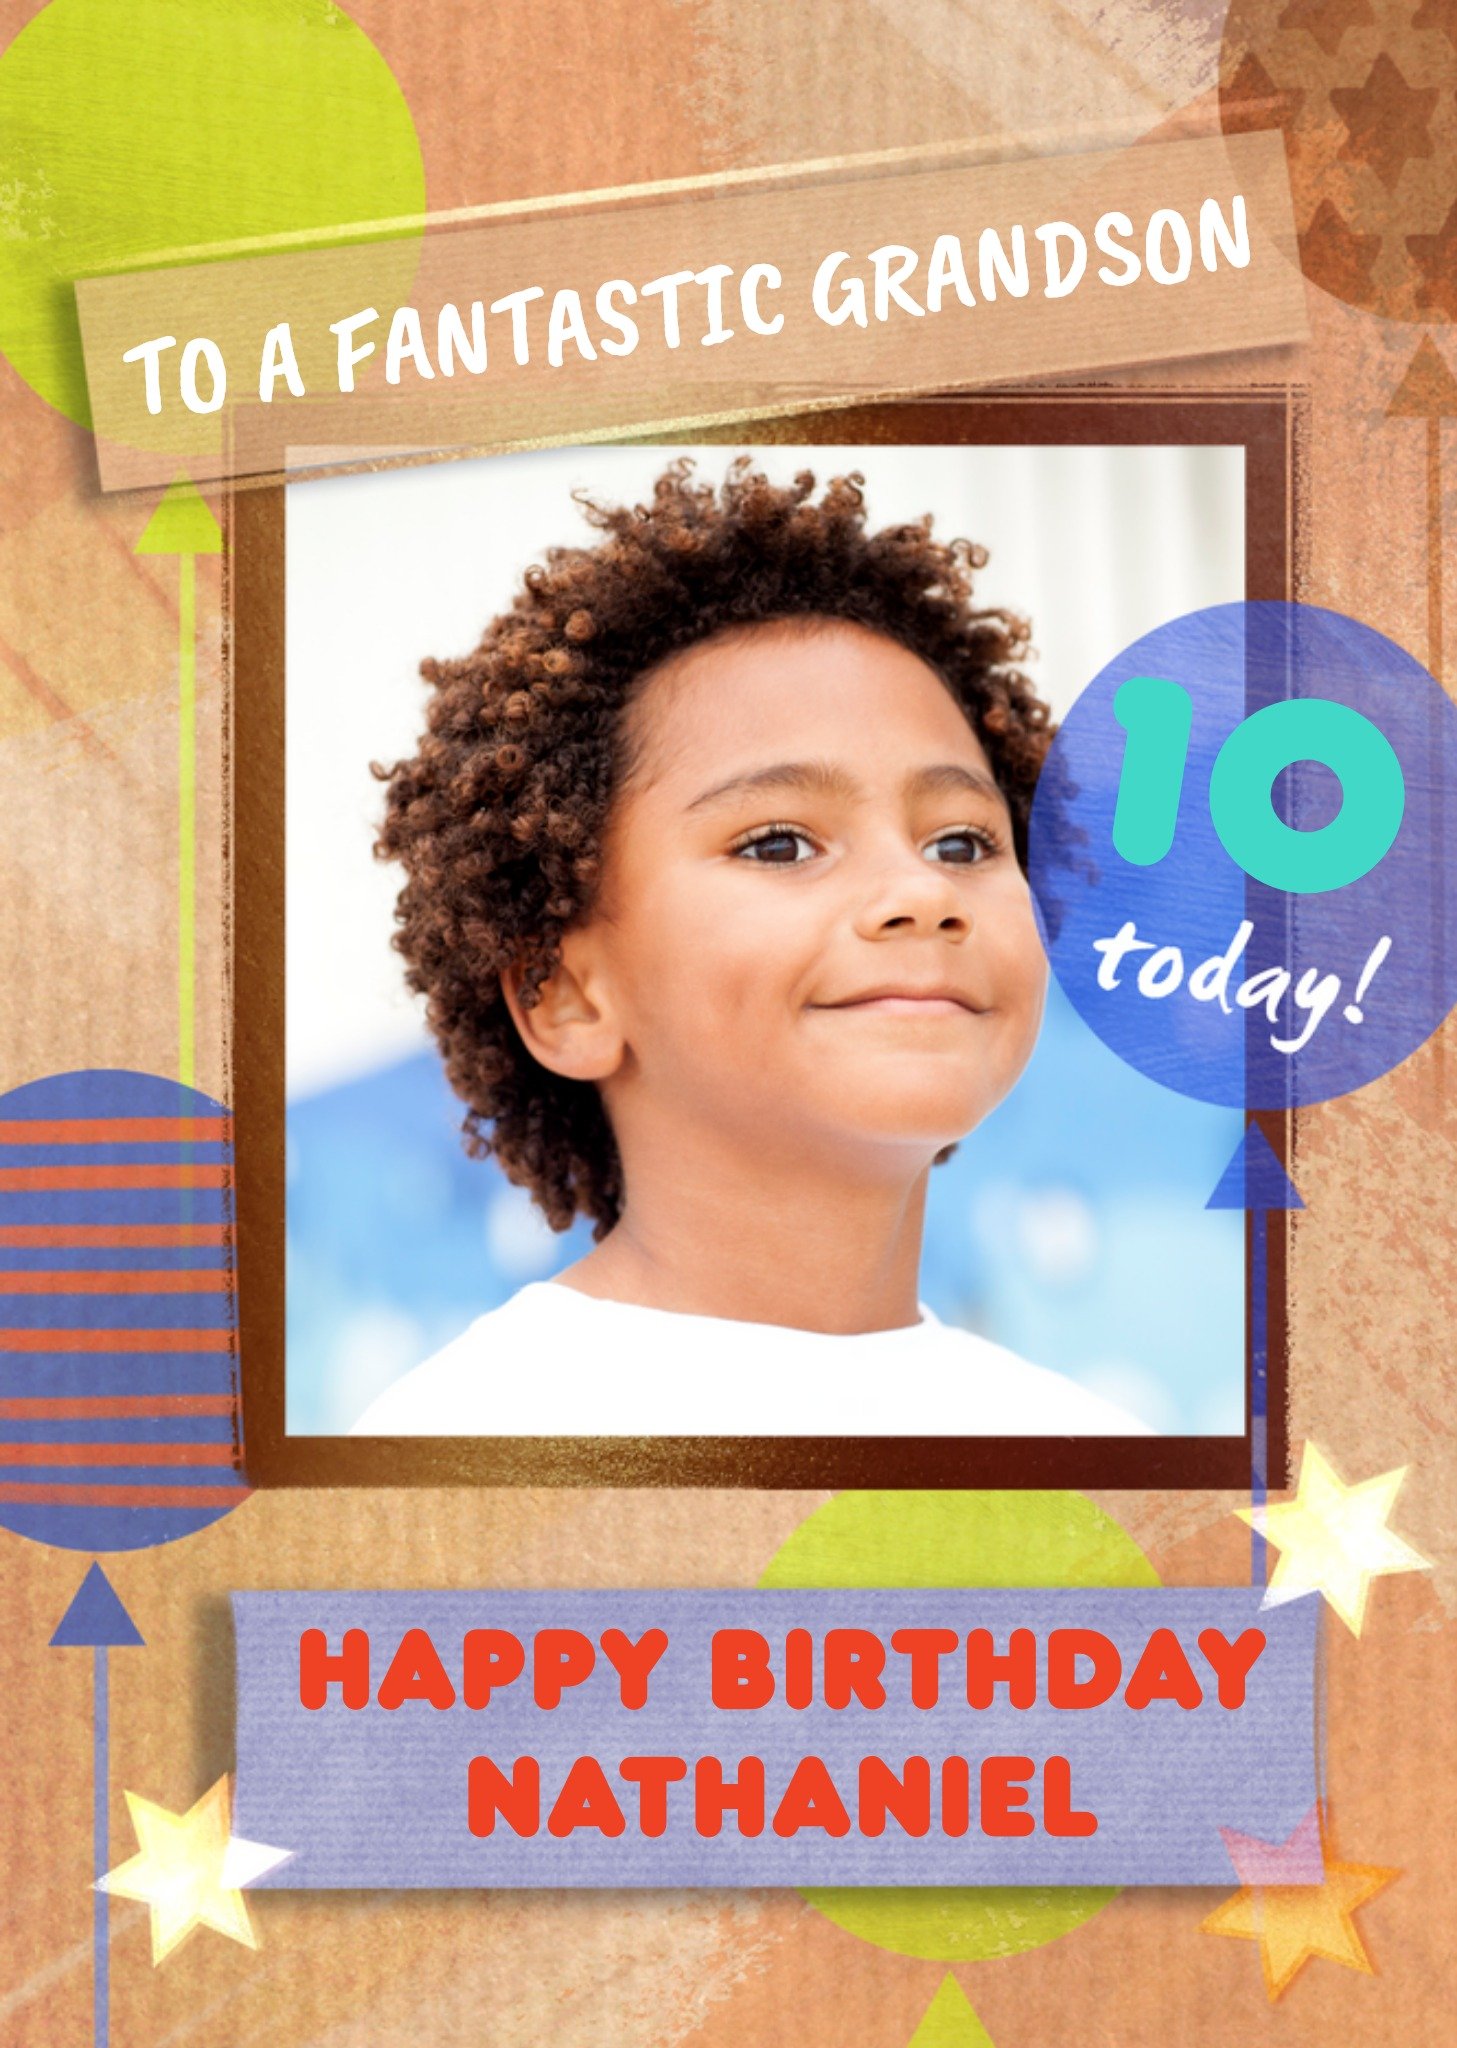 Moonpig Fantastic Grandson 10 Today Photo Upload Birthday Card Ecard